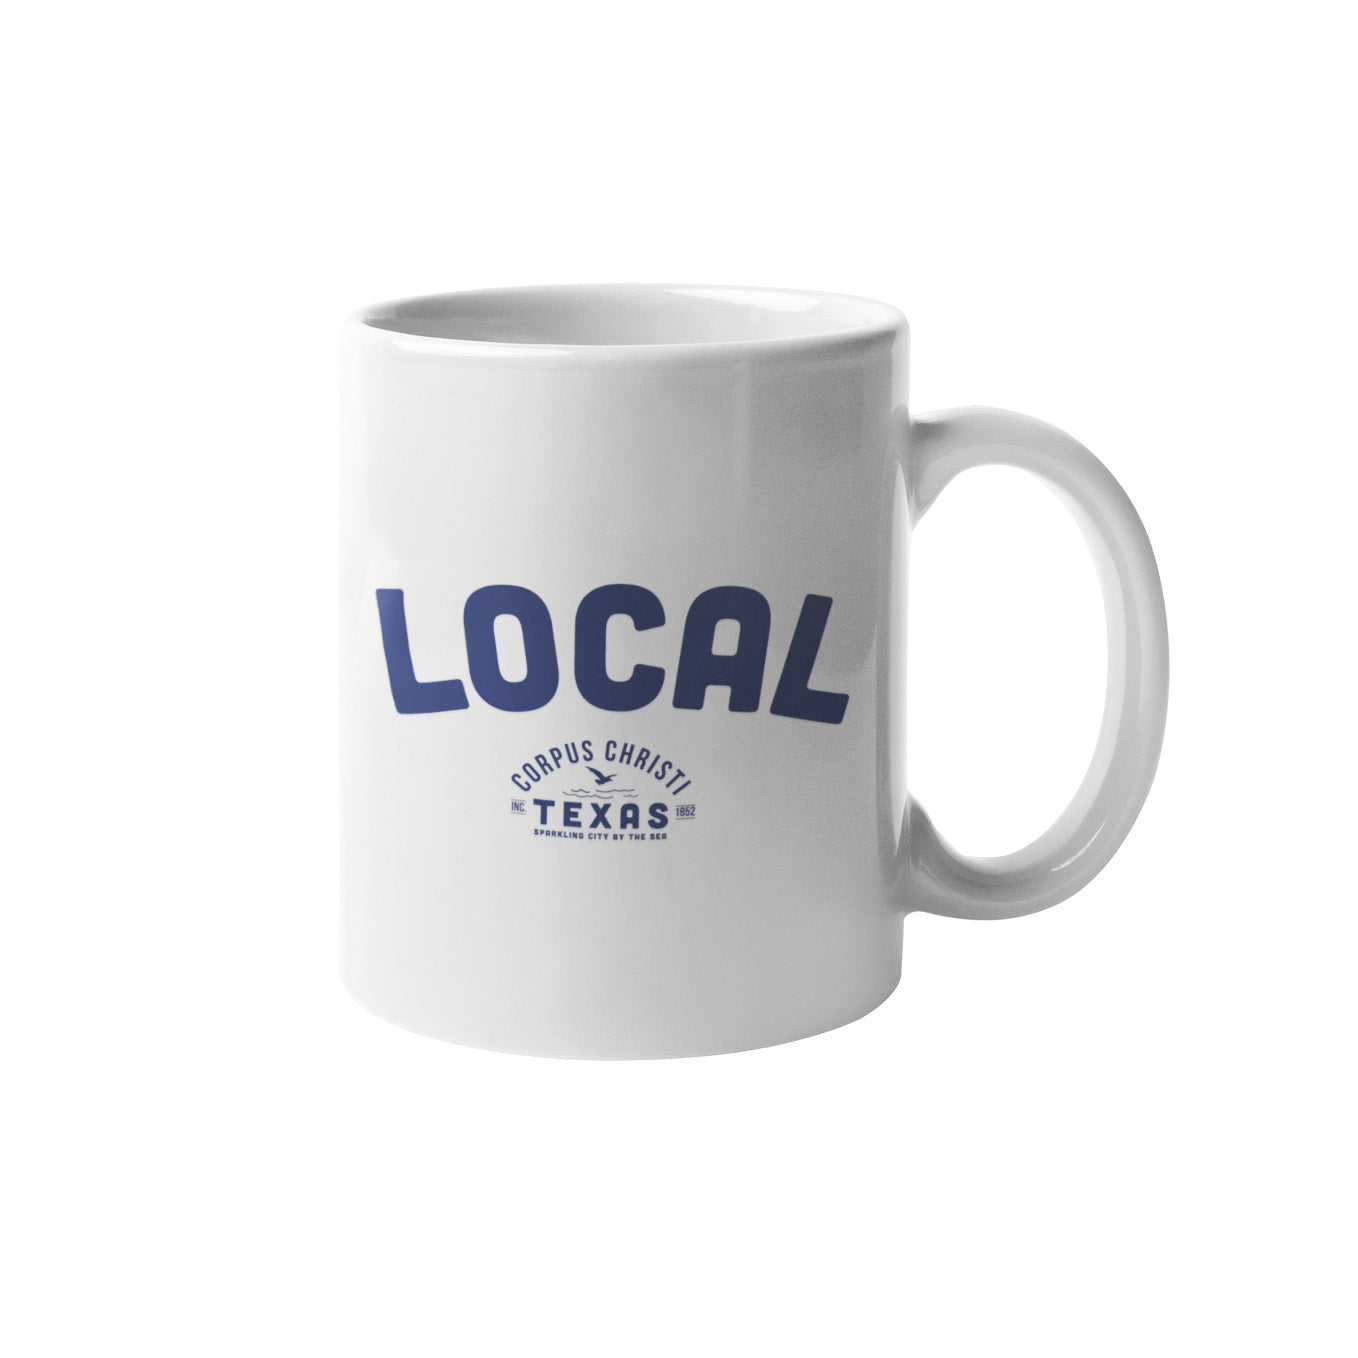 CC Local Mug